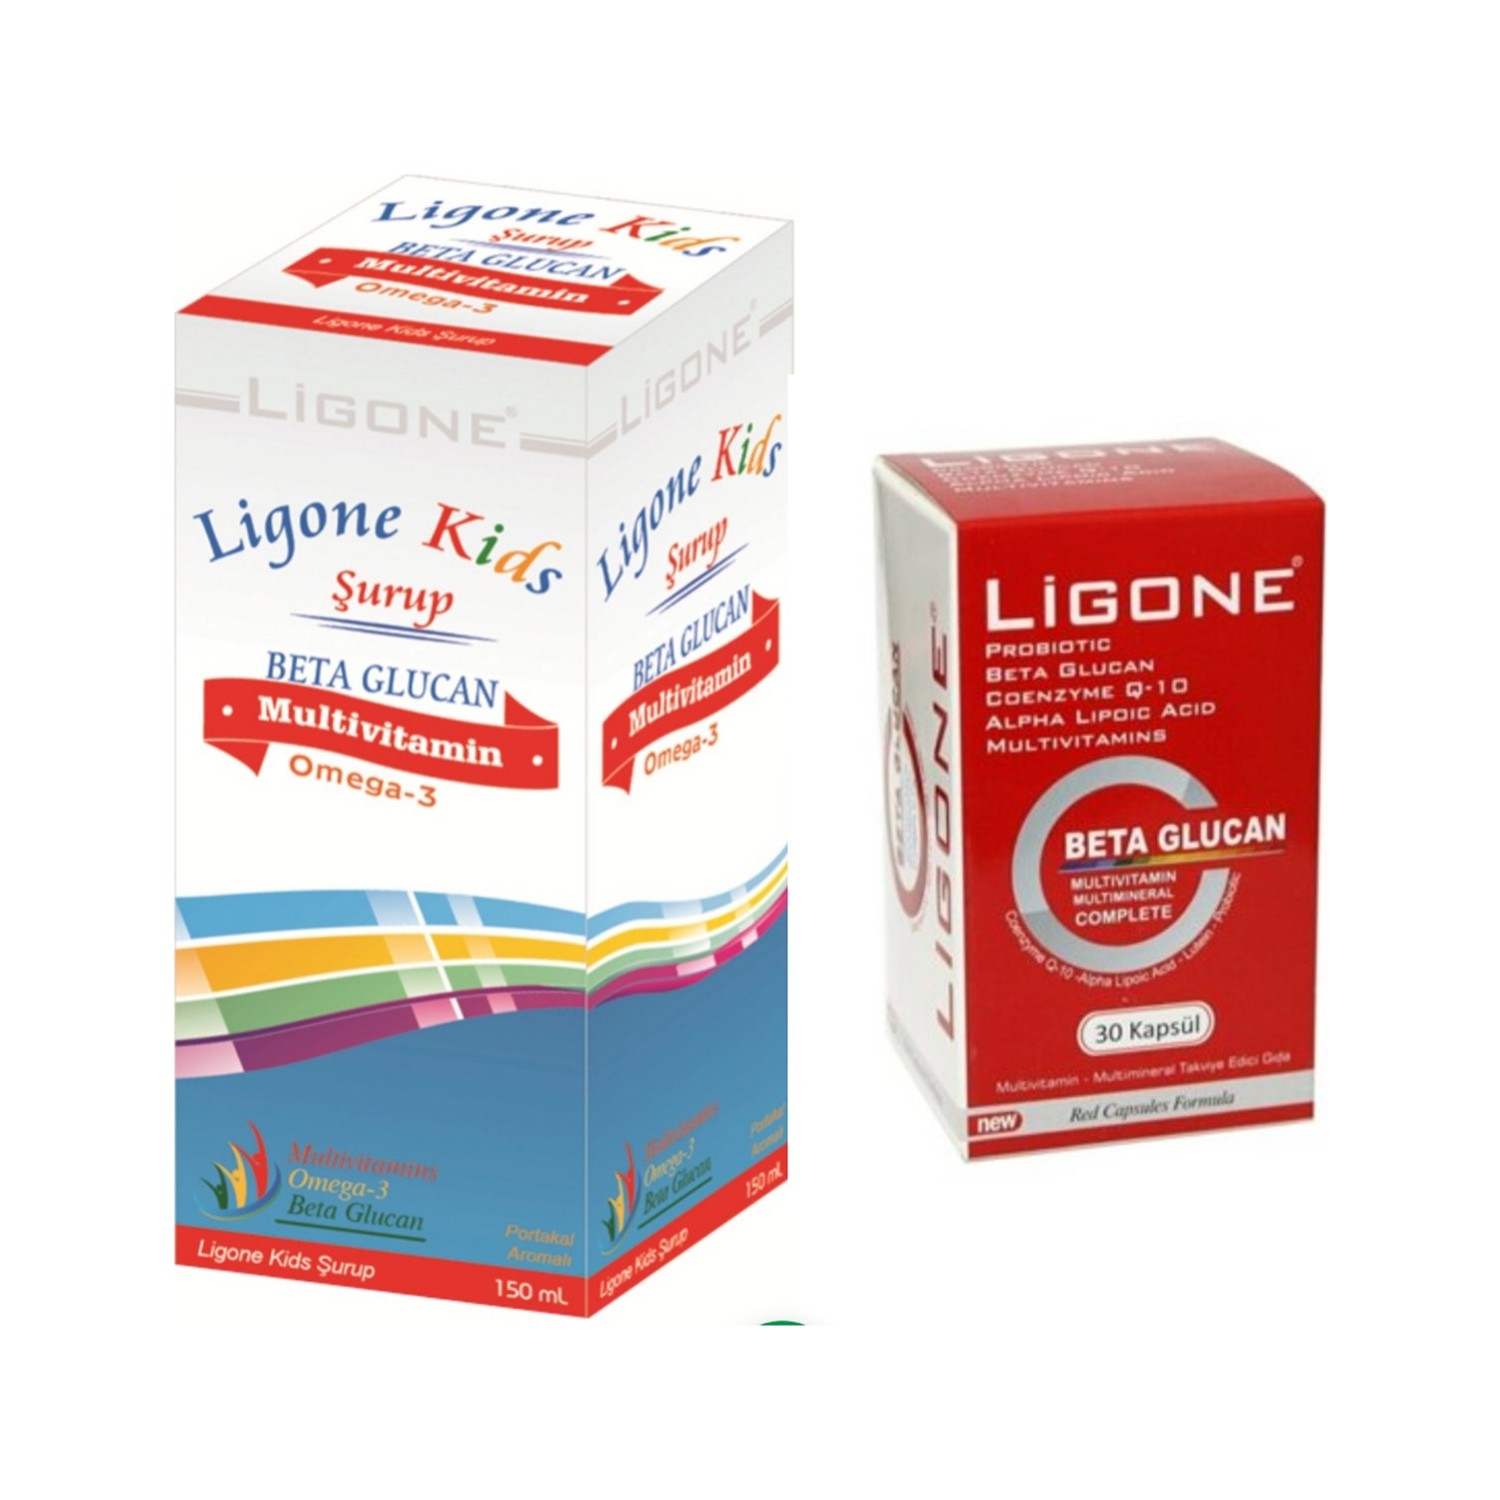 Мультивитаминный сироп Ligone Kids, 150 мл + бета глюкан Ligone, 30 капсул мультивитаминный сироп rc farma take 2 ode ligone kids 150 мл